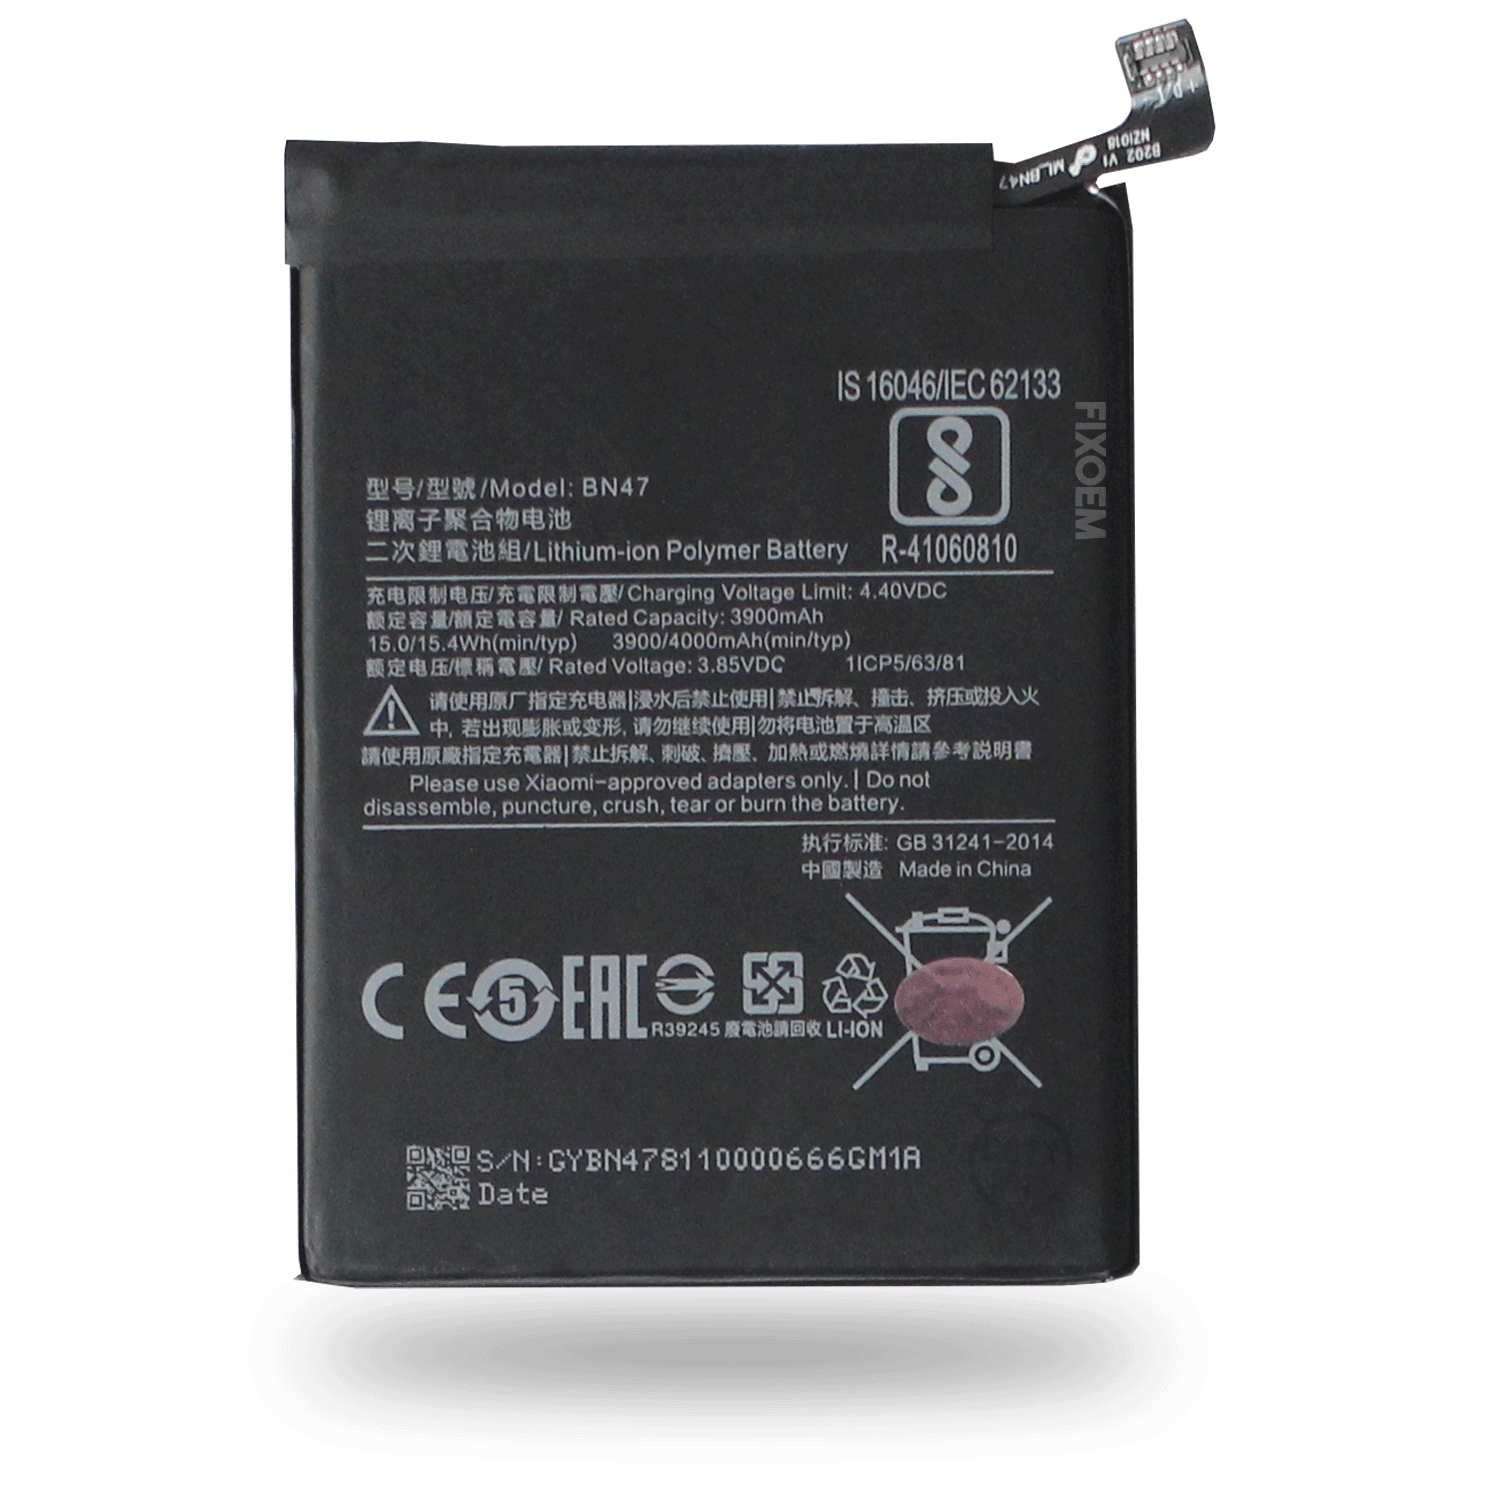 Bateria Xiaomi Redmi 6 Pro / Mi A2 Lite Bn47 M1804c3dg M1804c3dh M1804c3di M1804d2sg M1804d2si a solo $ 130.00 Refaccion y puestos celulares, refurbish y microelectronica.- FixOEM